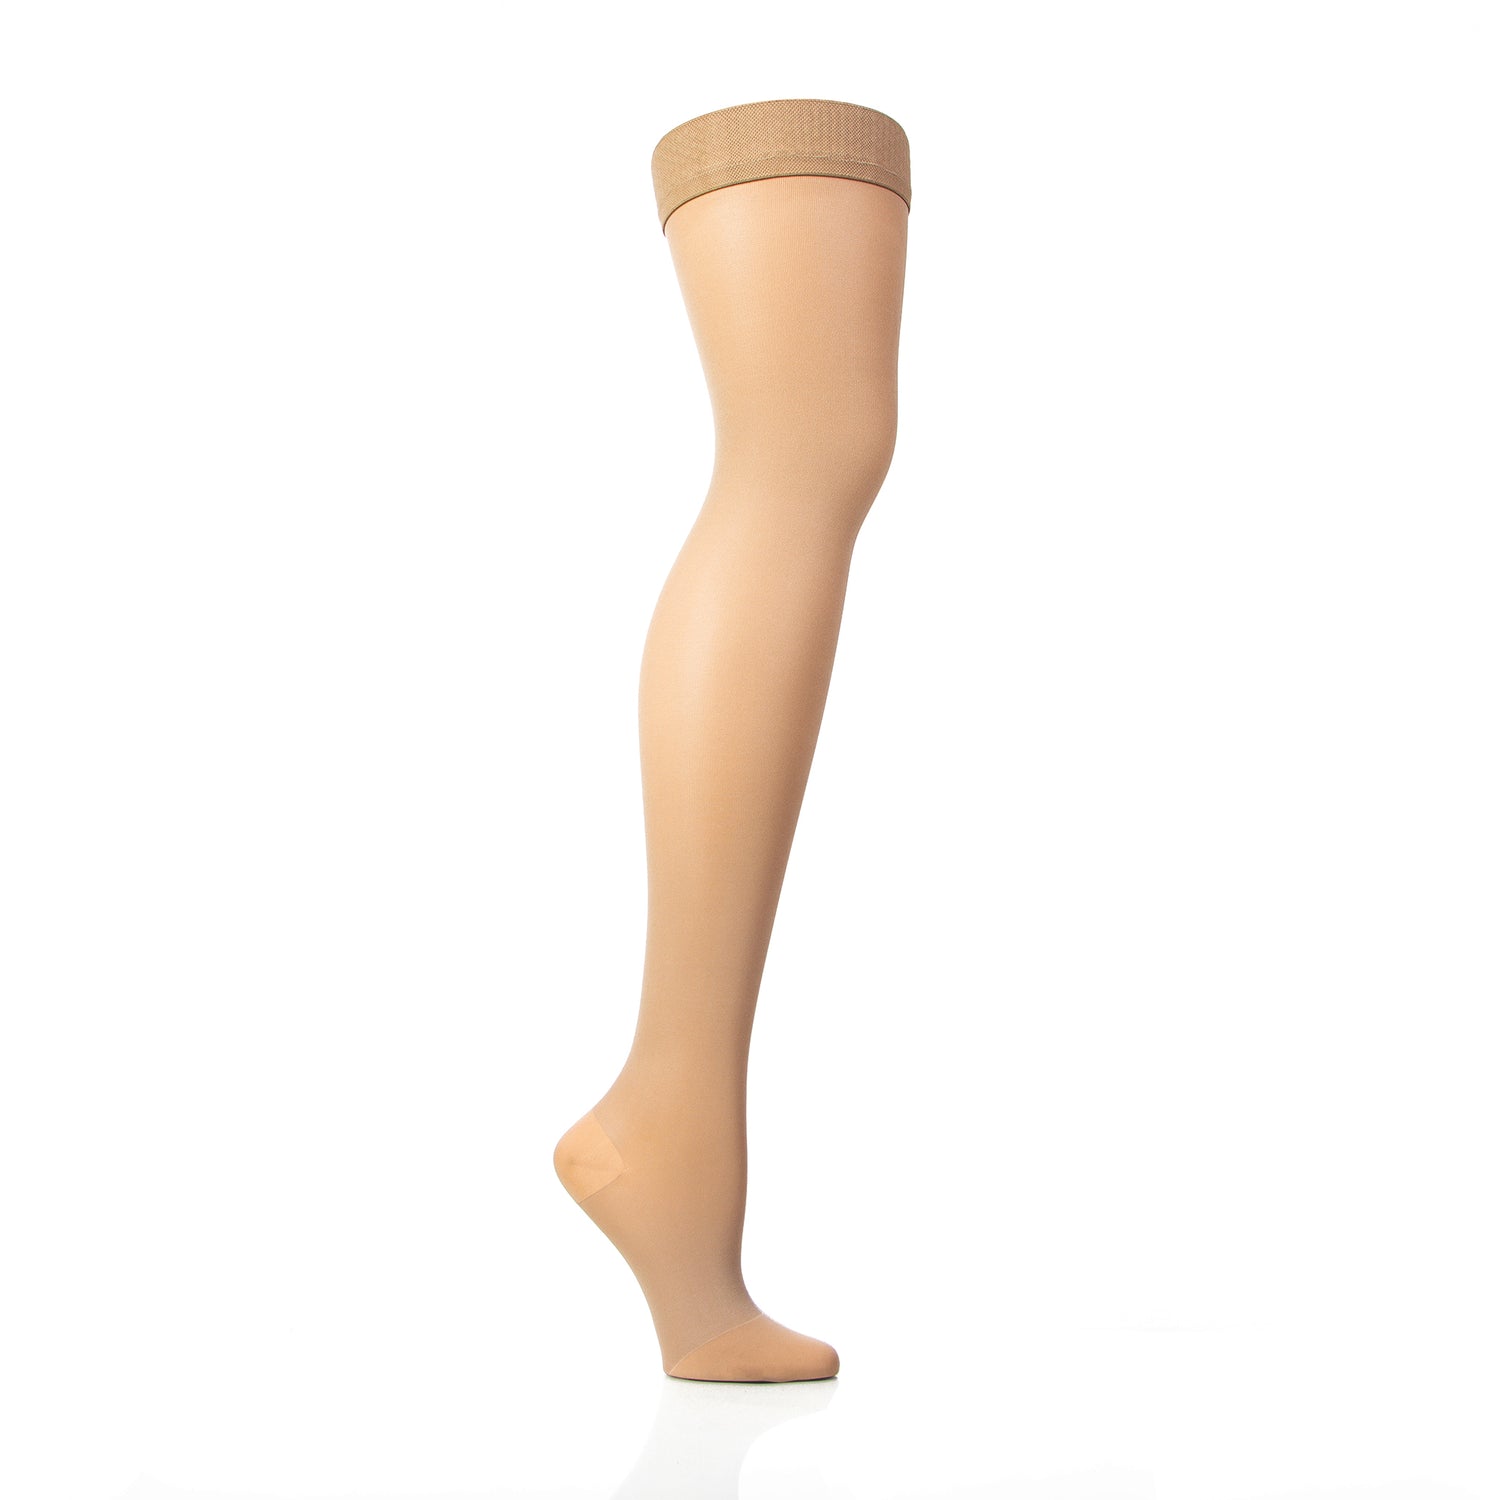 20-30 mmHg Thigh High Compression Stockings Medical Treatmen Socks